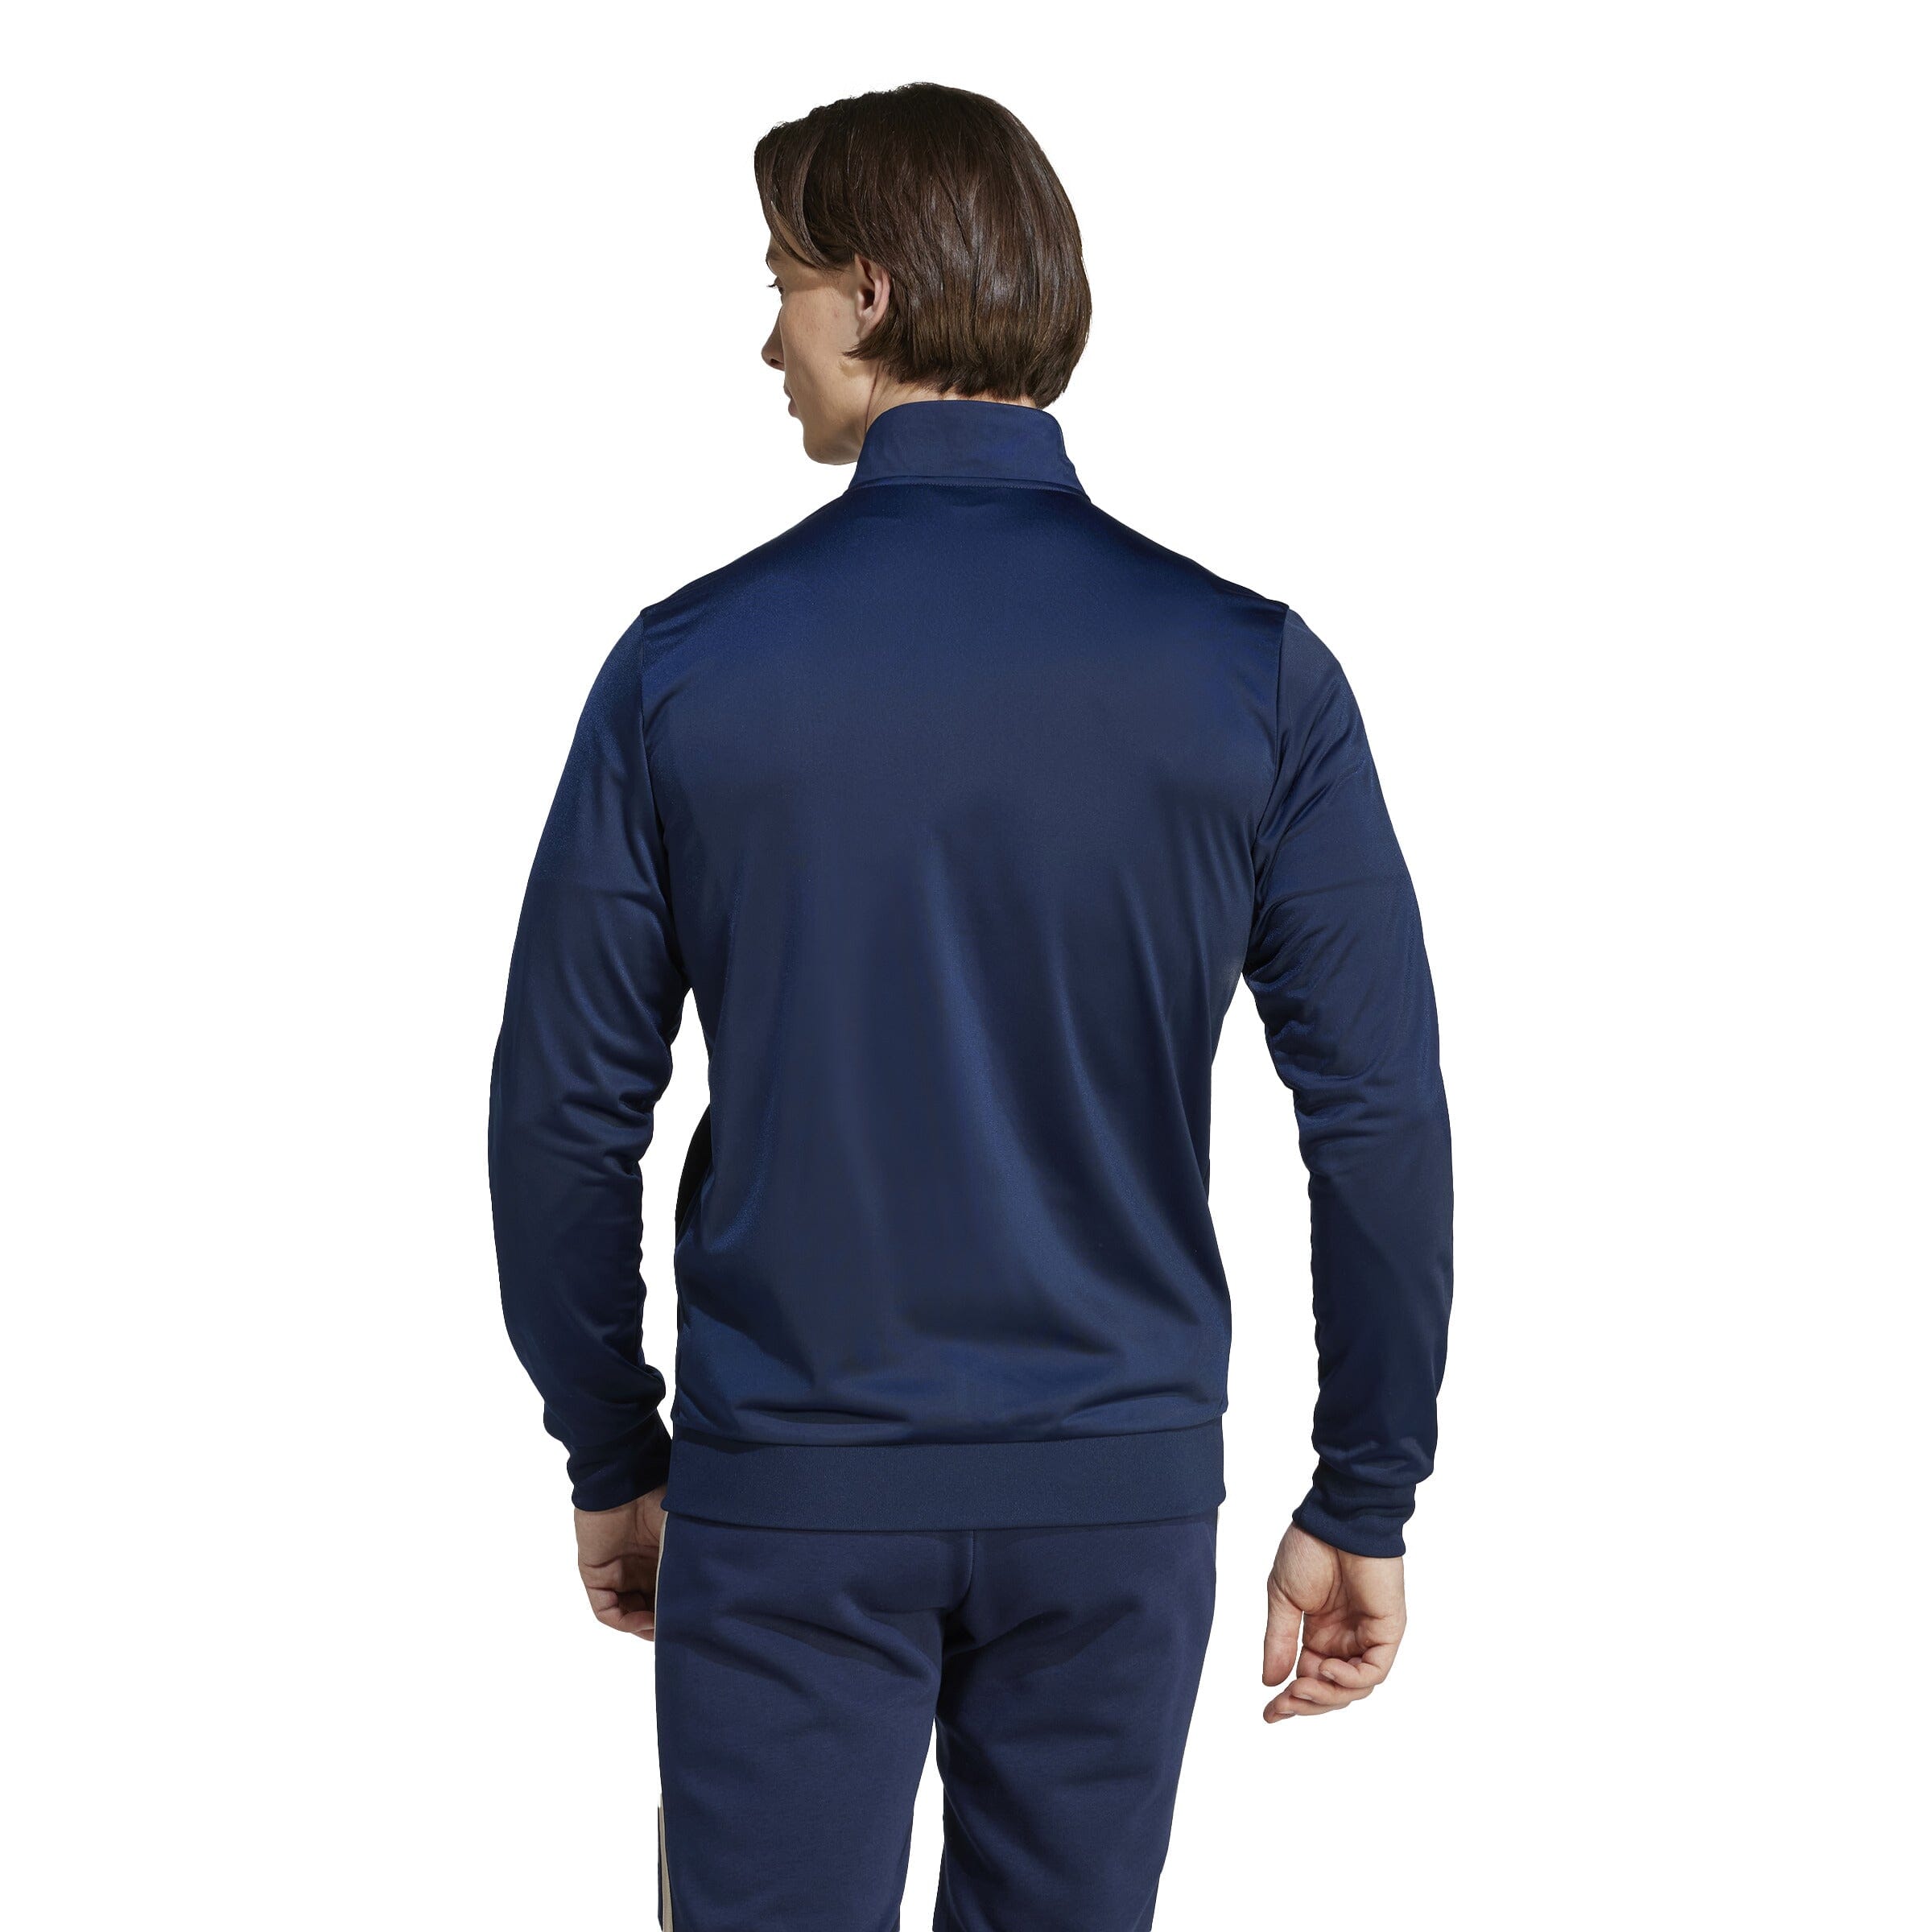 Adidas New York City FC DNA Navy Long Sleeve Shirt, Men's, Small, Blue